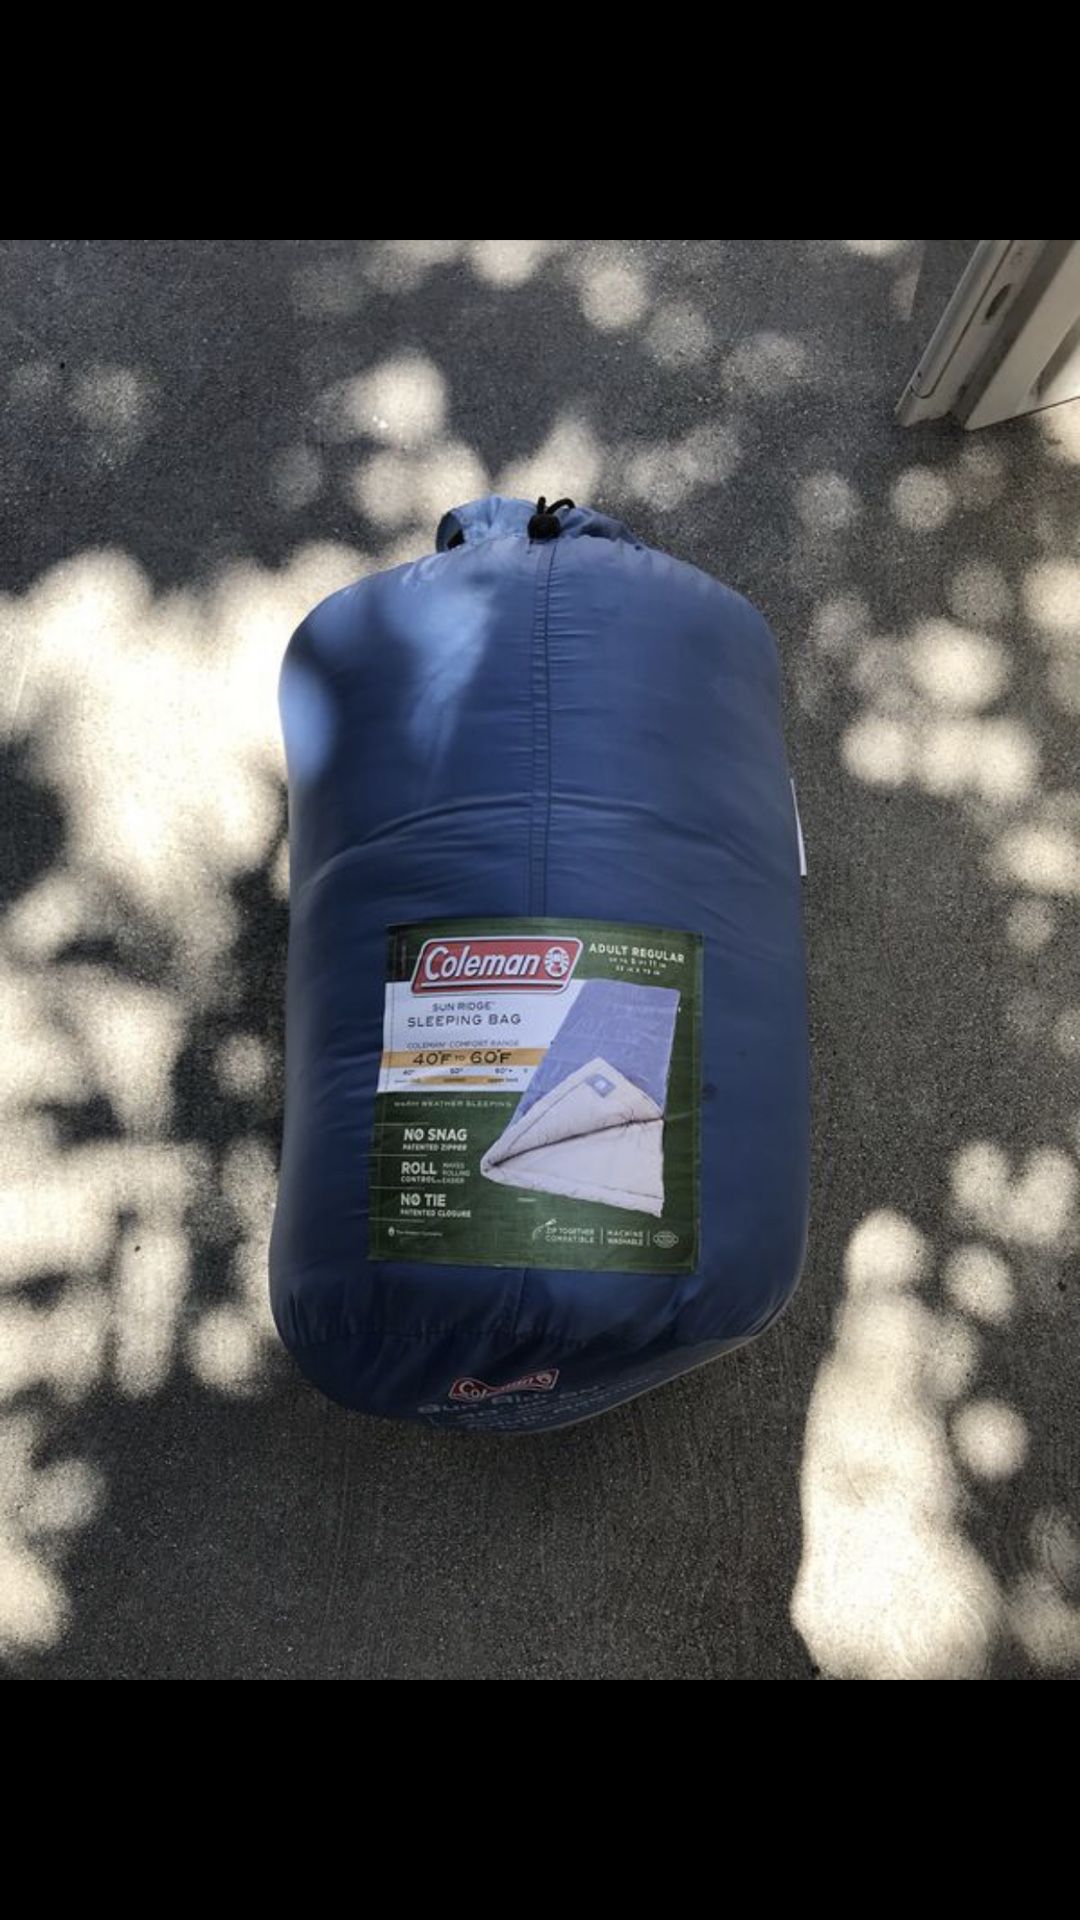 Coleman Blue sleeping bag 33x17